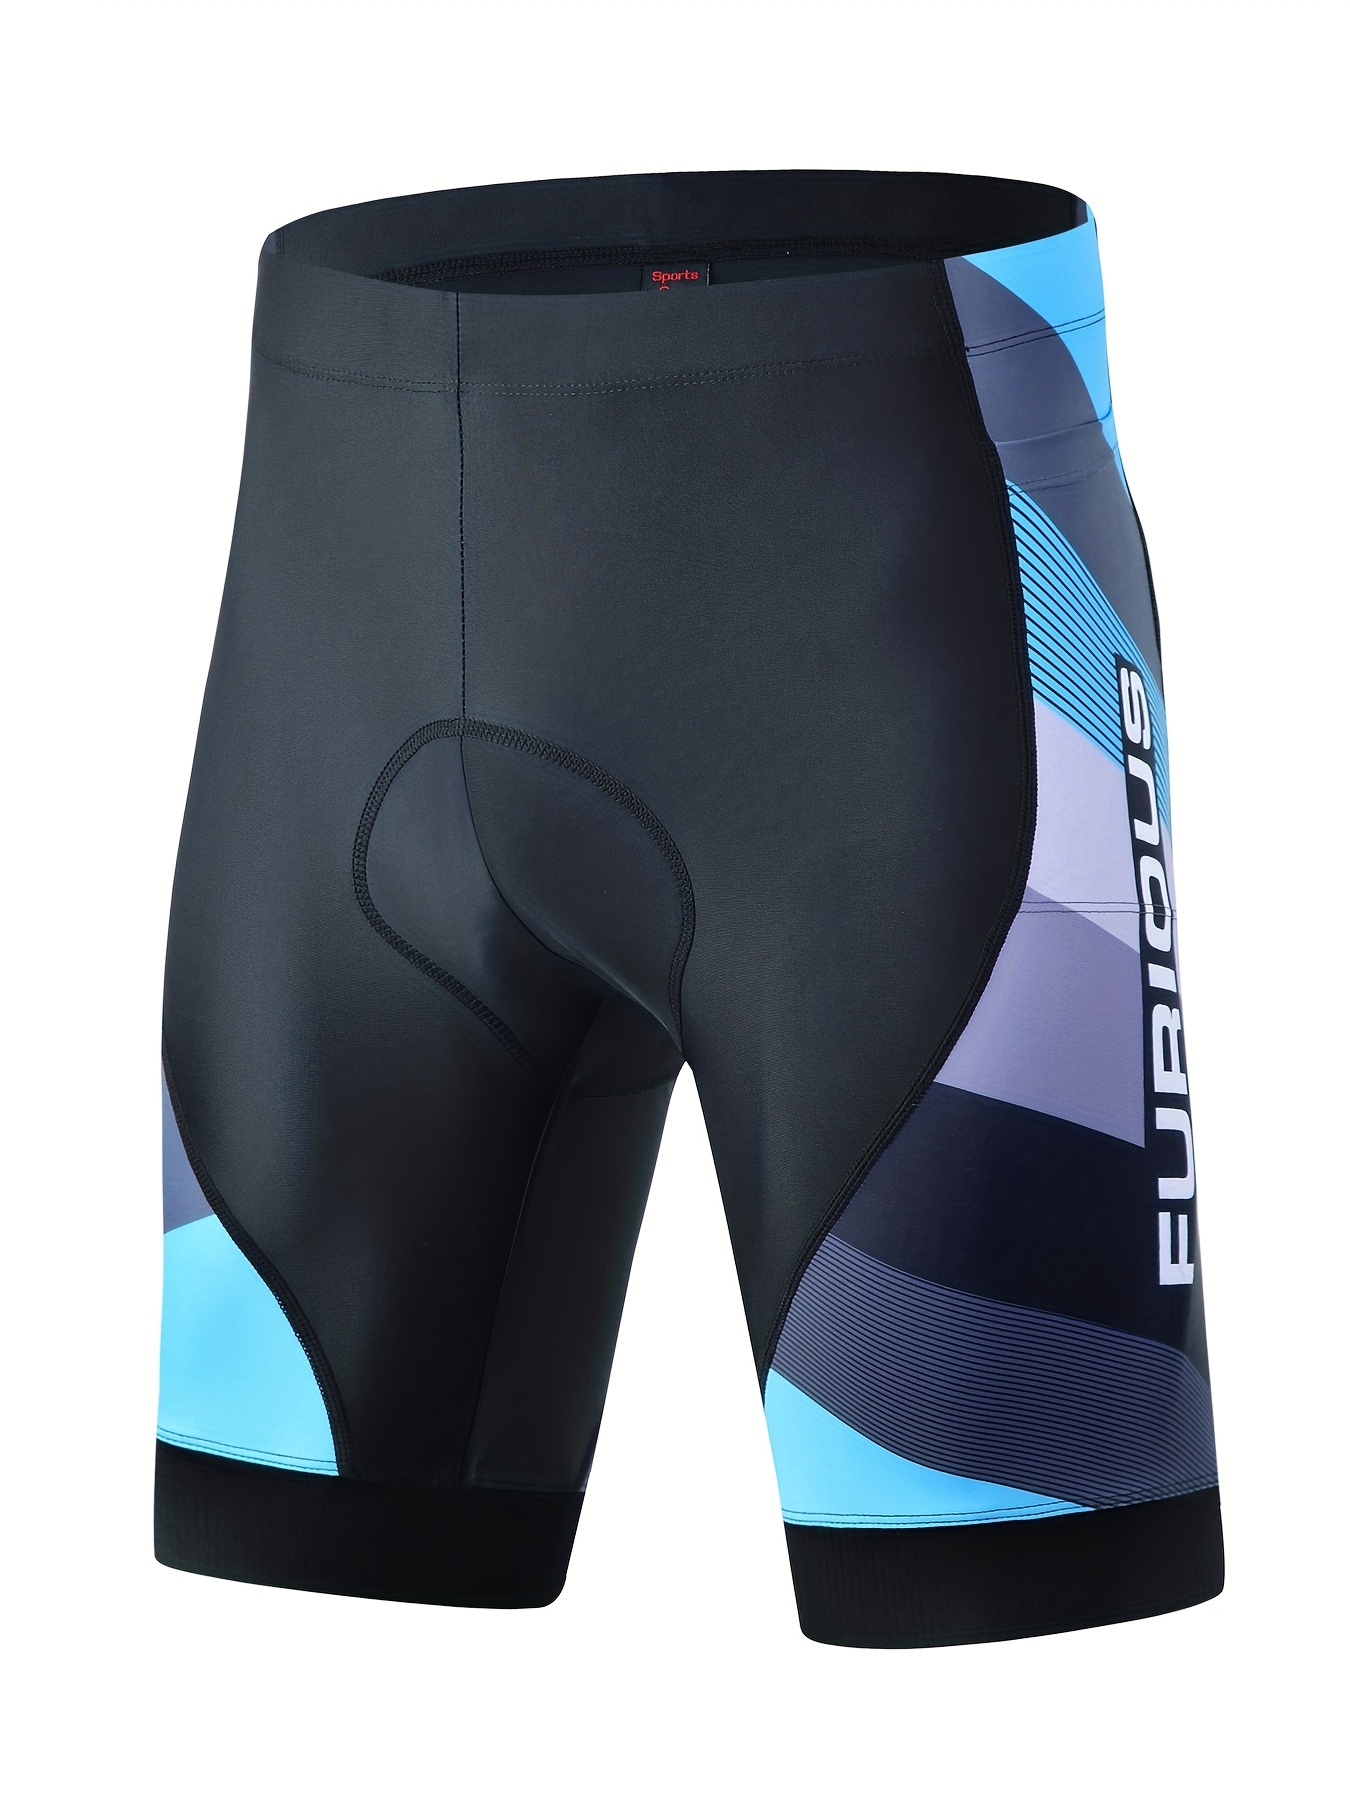  Mens Padded Bike Shorts Cycling Tights 3D Padding Bicycle  Accessories Road Biking MTB Pockets UPF 50+ Black/Grey Size M